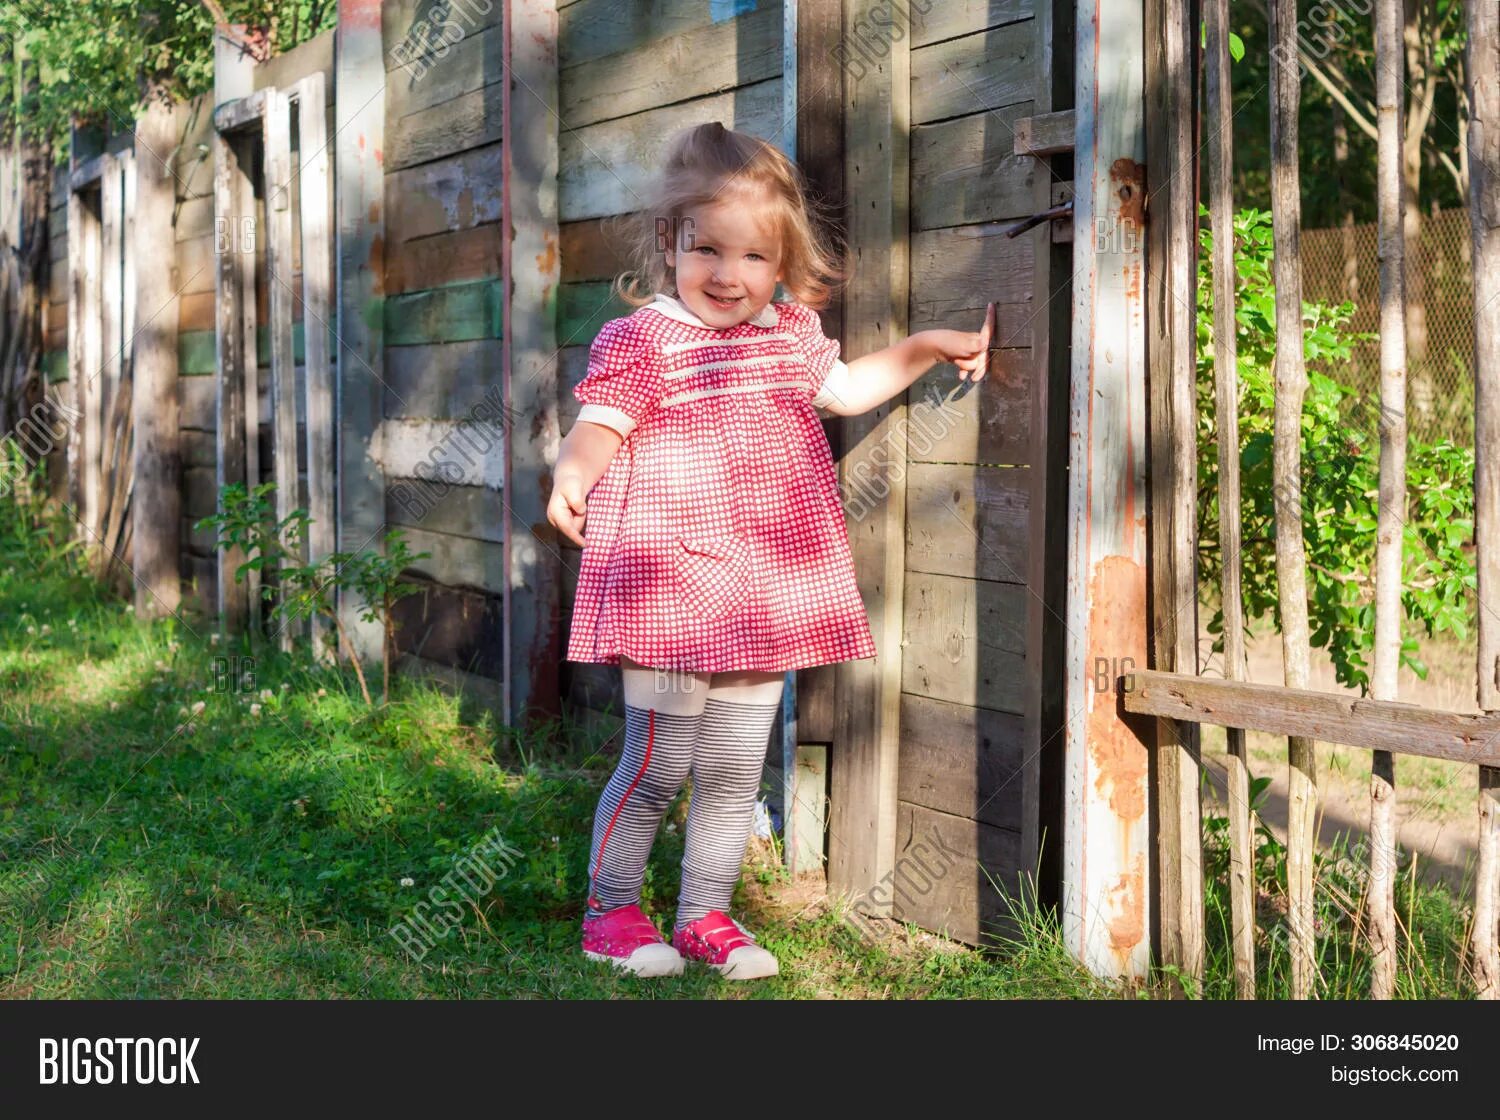 I like little girls. Девочка платье на заборе. Расшатывающая забор девочка. Следить маленькая девочка показывает кулачок. Littlest girl enter Gate.